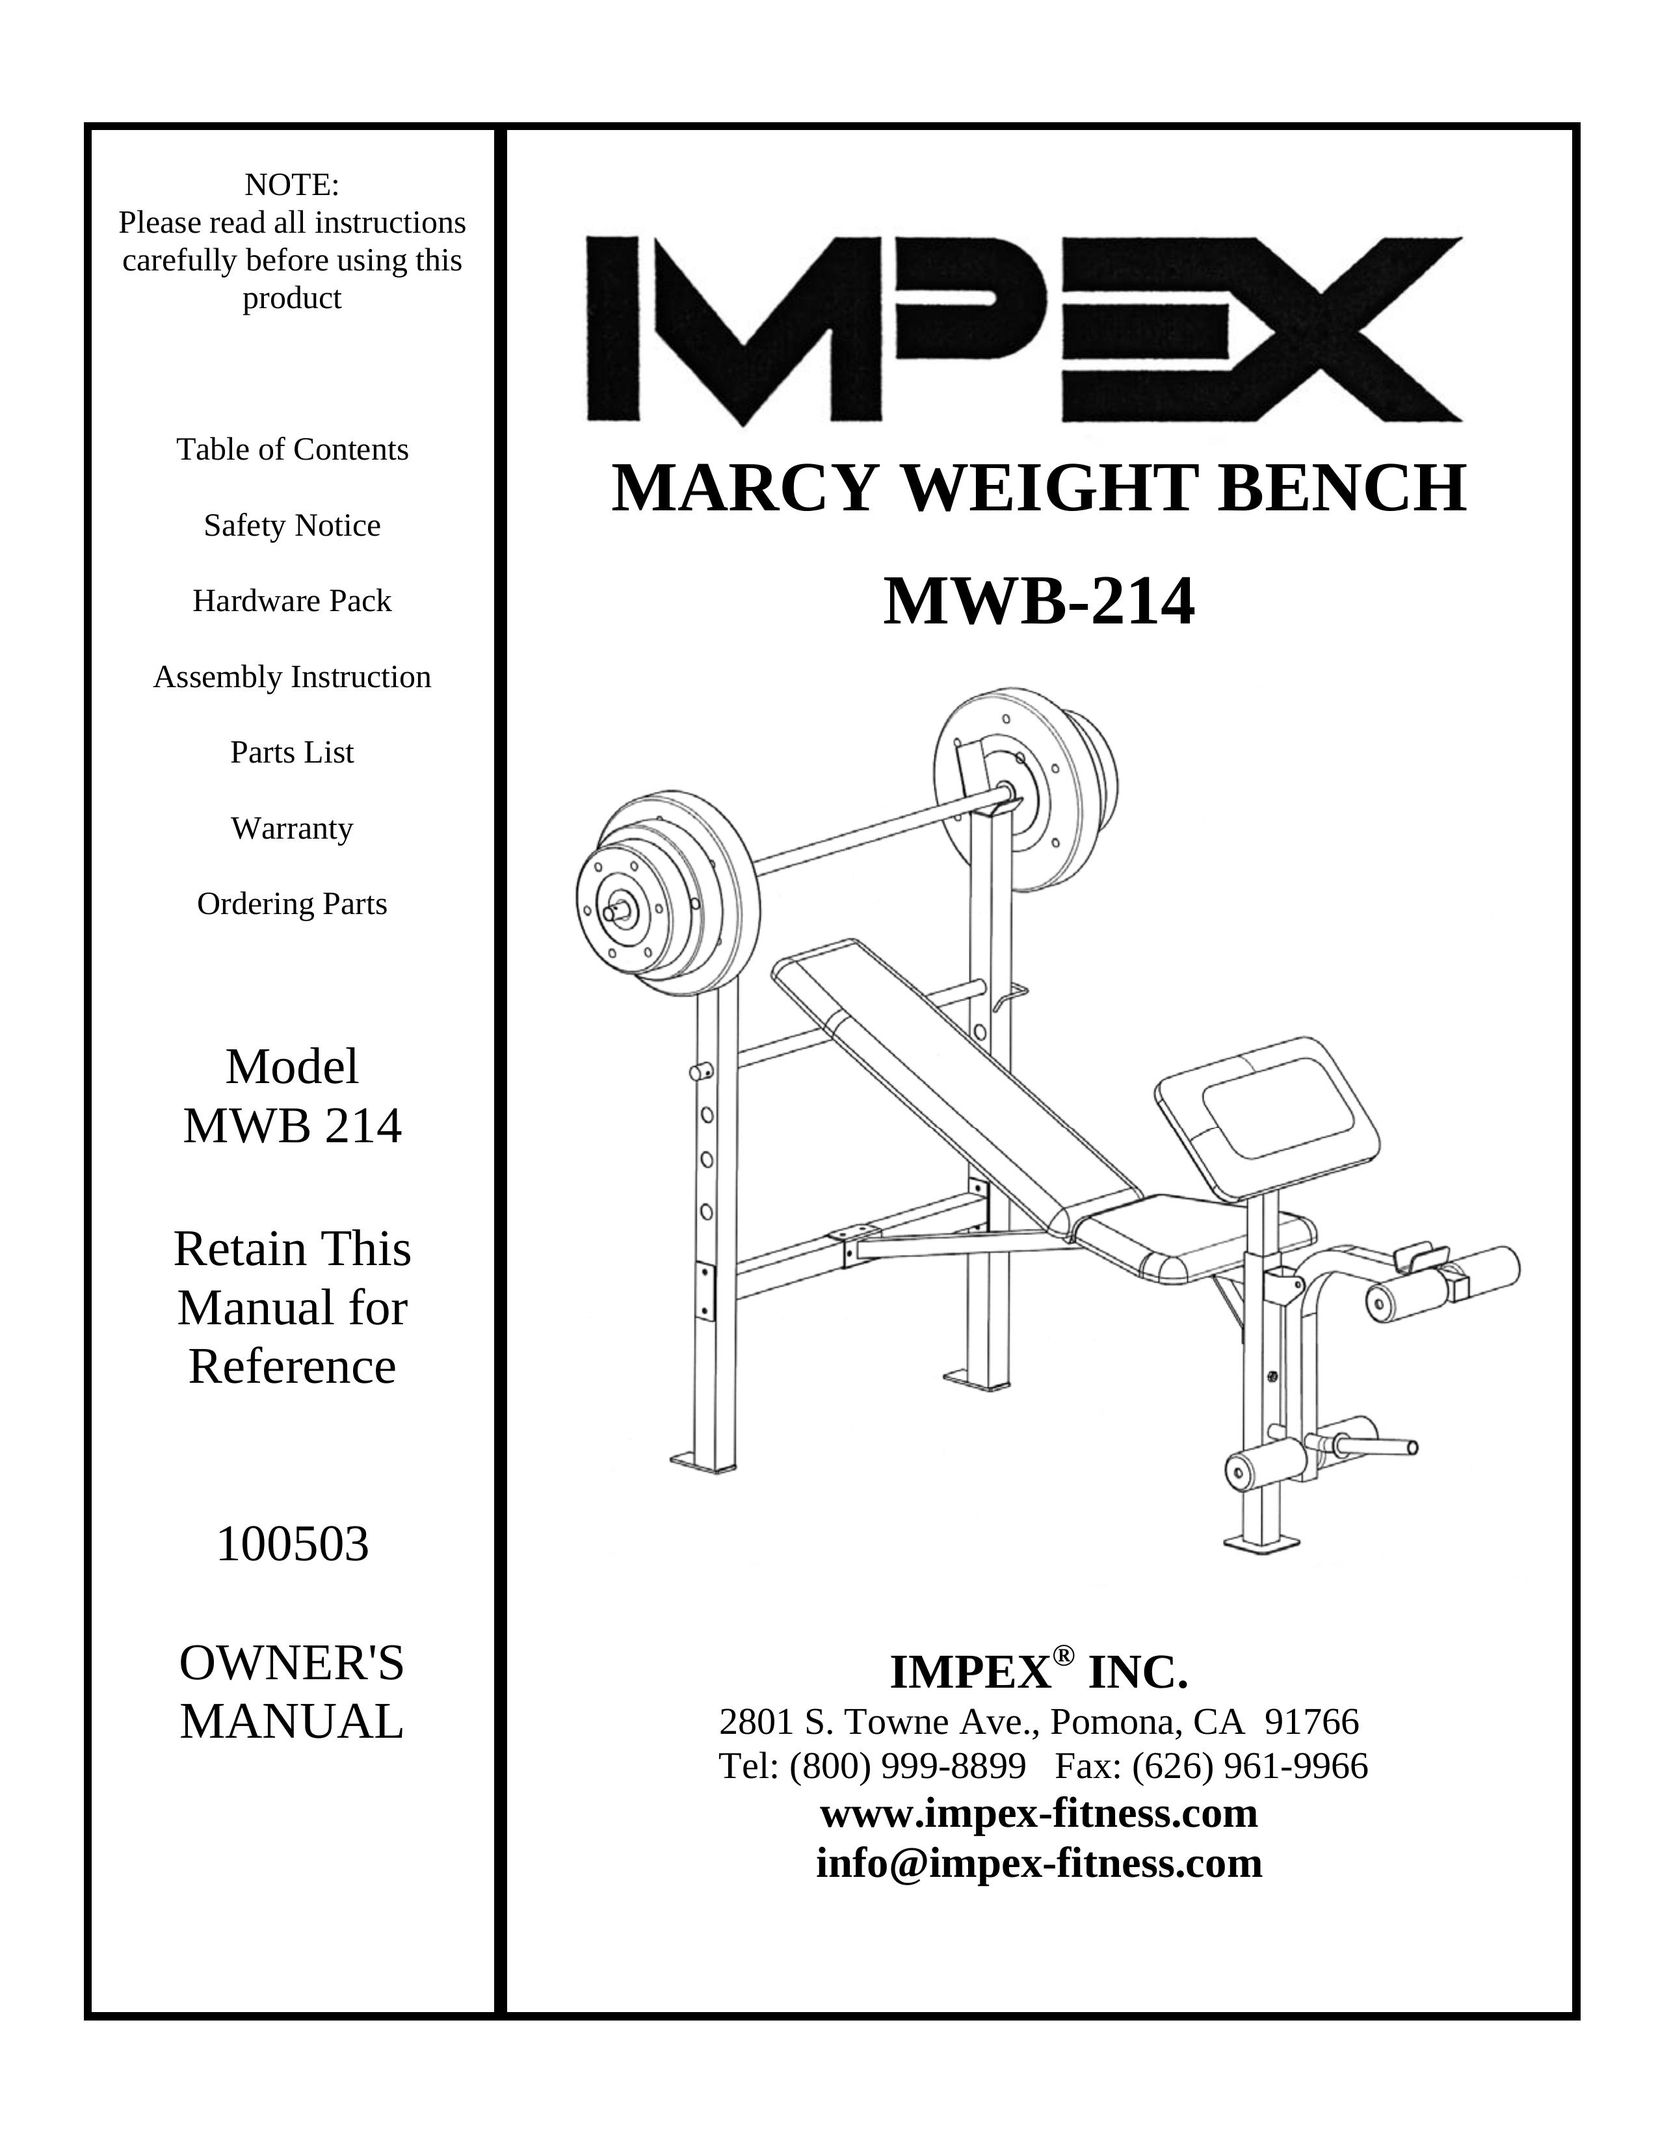 Impex MWB 214 Fitness Equipment User Manual